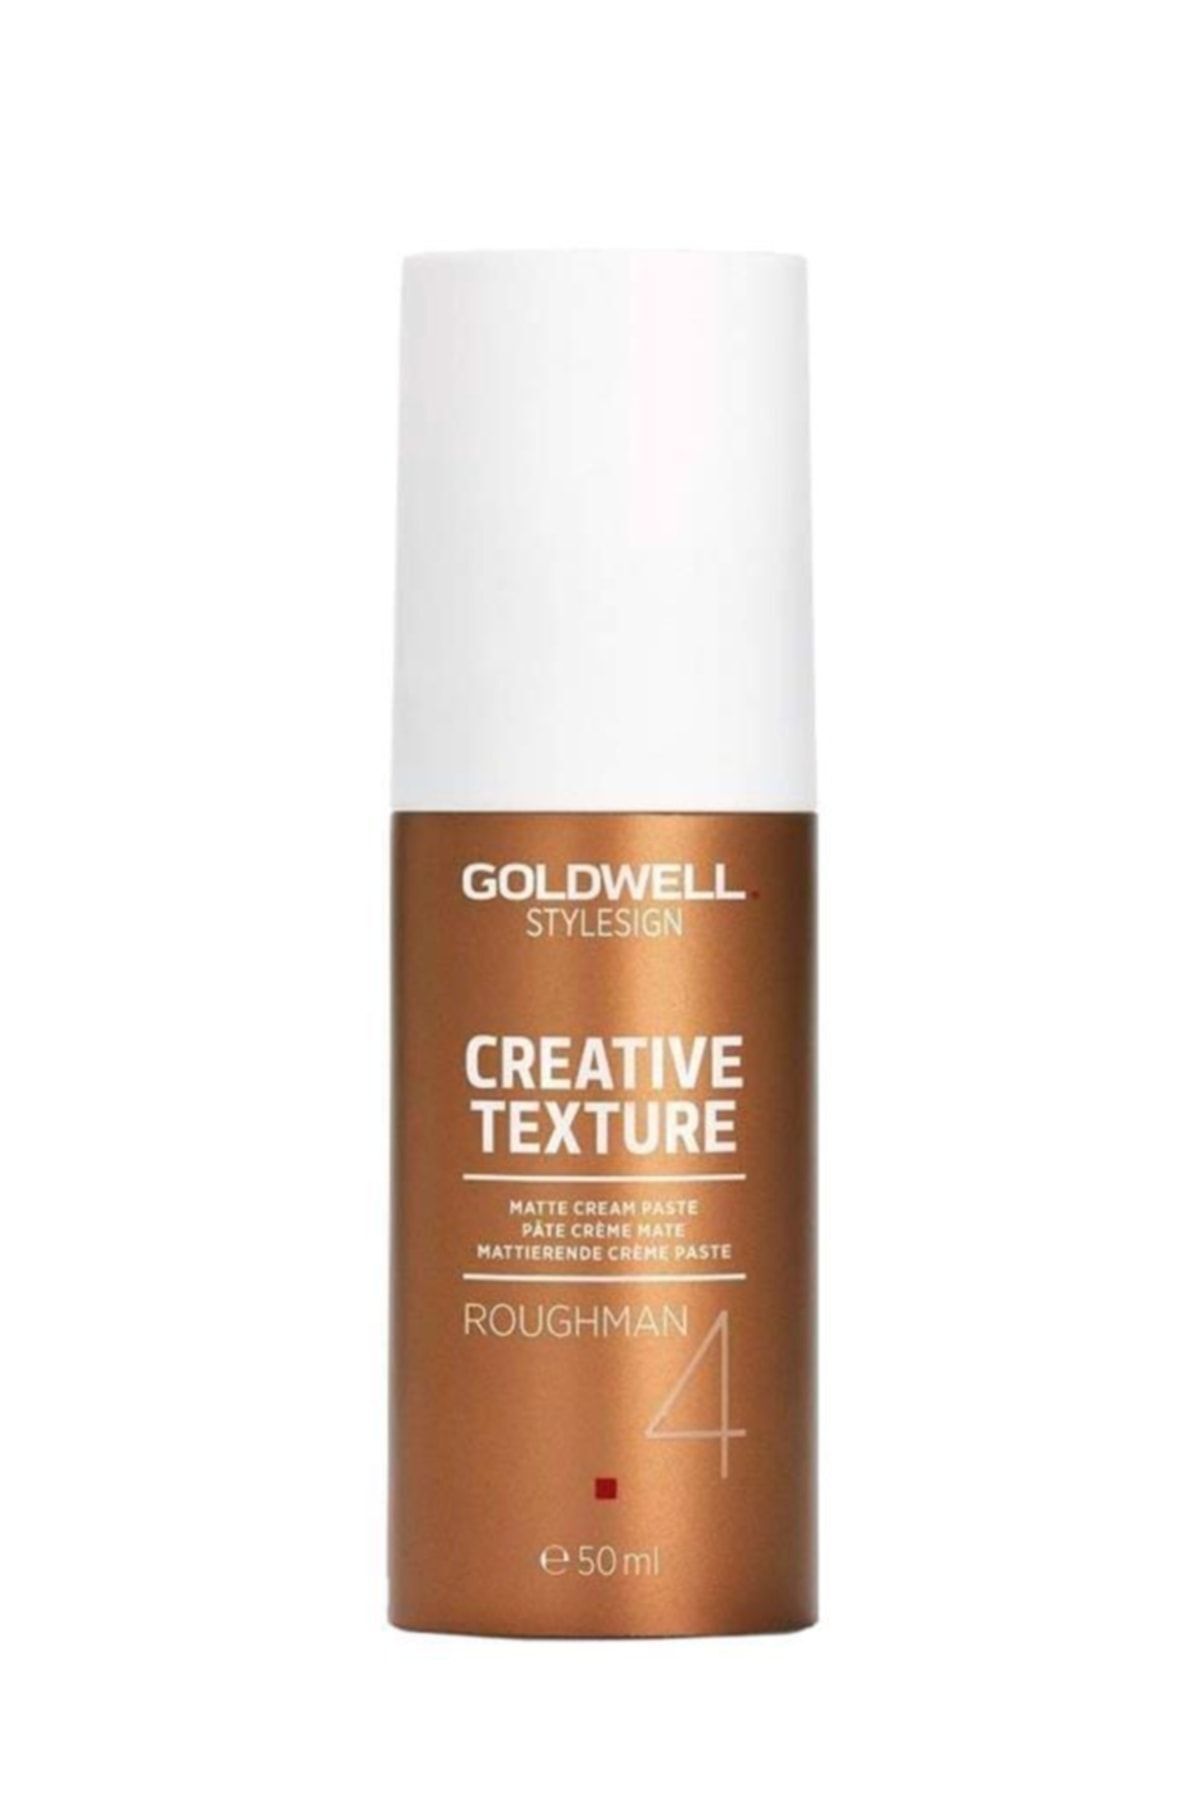 GOLDWELL Stylesign Creative Texture Matte Cream 4 50 Ml